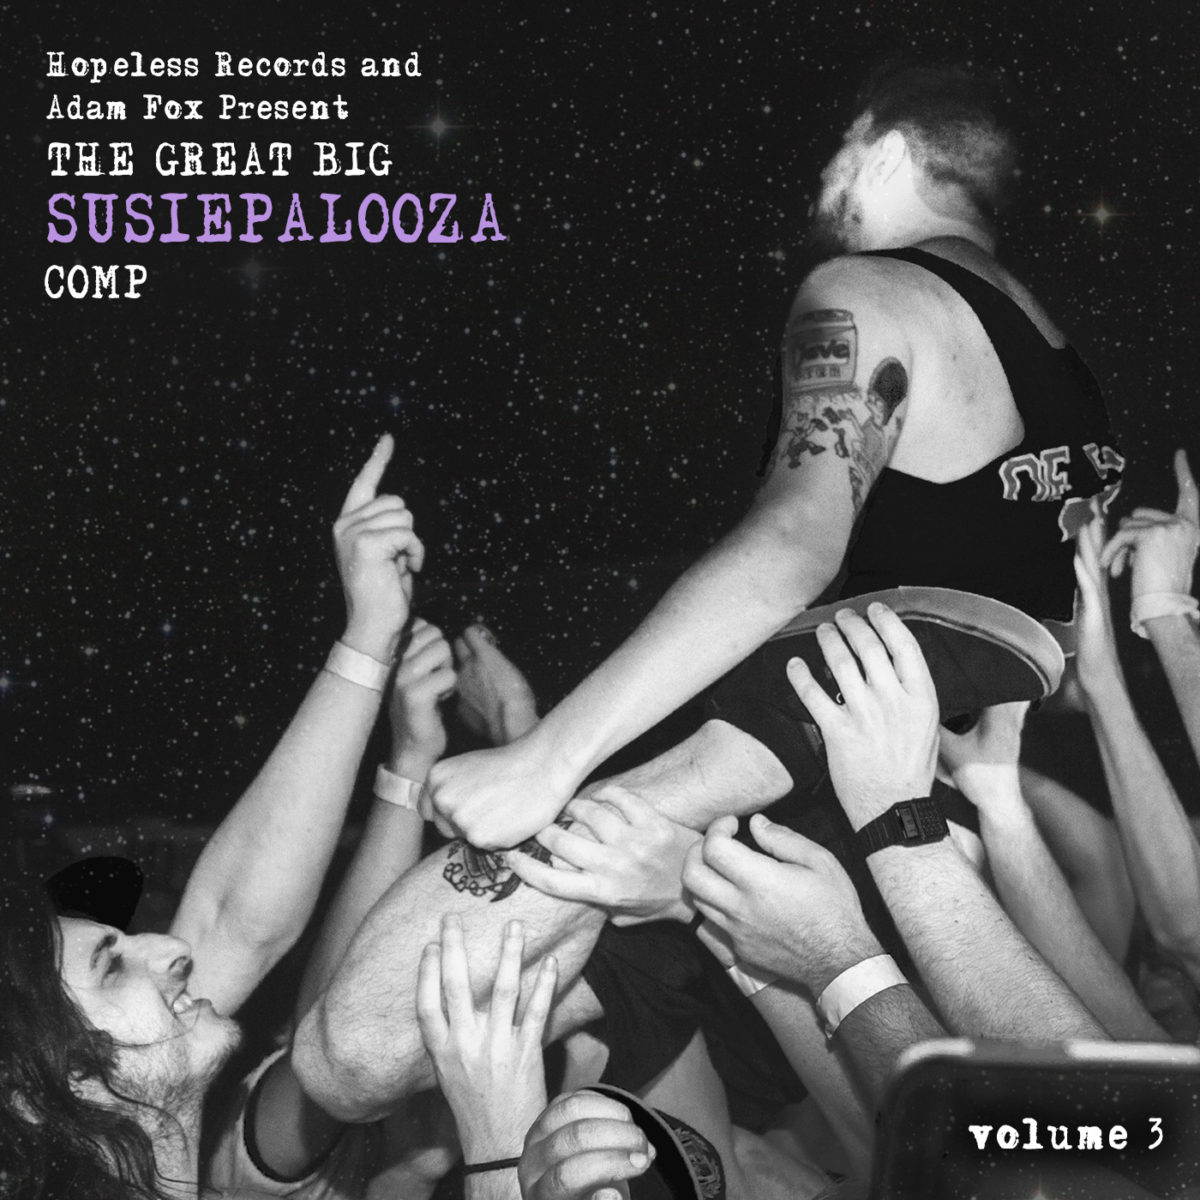 Hopeless Records and Adam Fox Present The Great Big Susiepalooza Comp: Volume 3